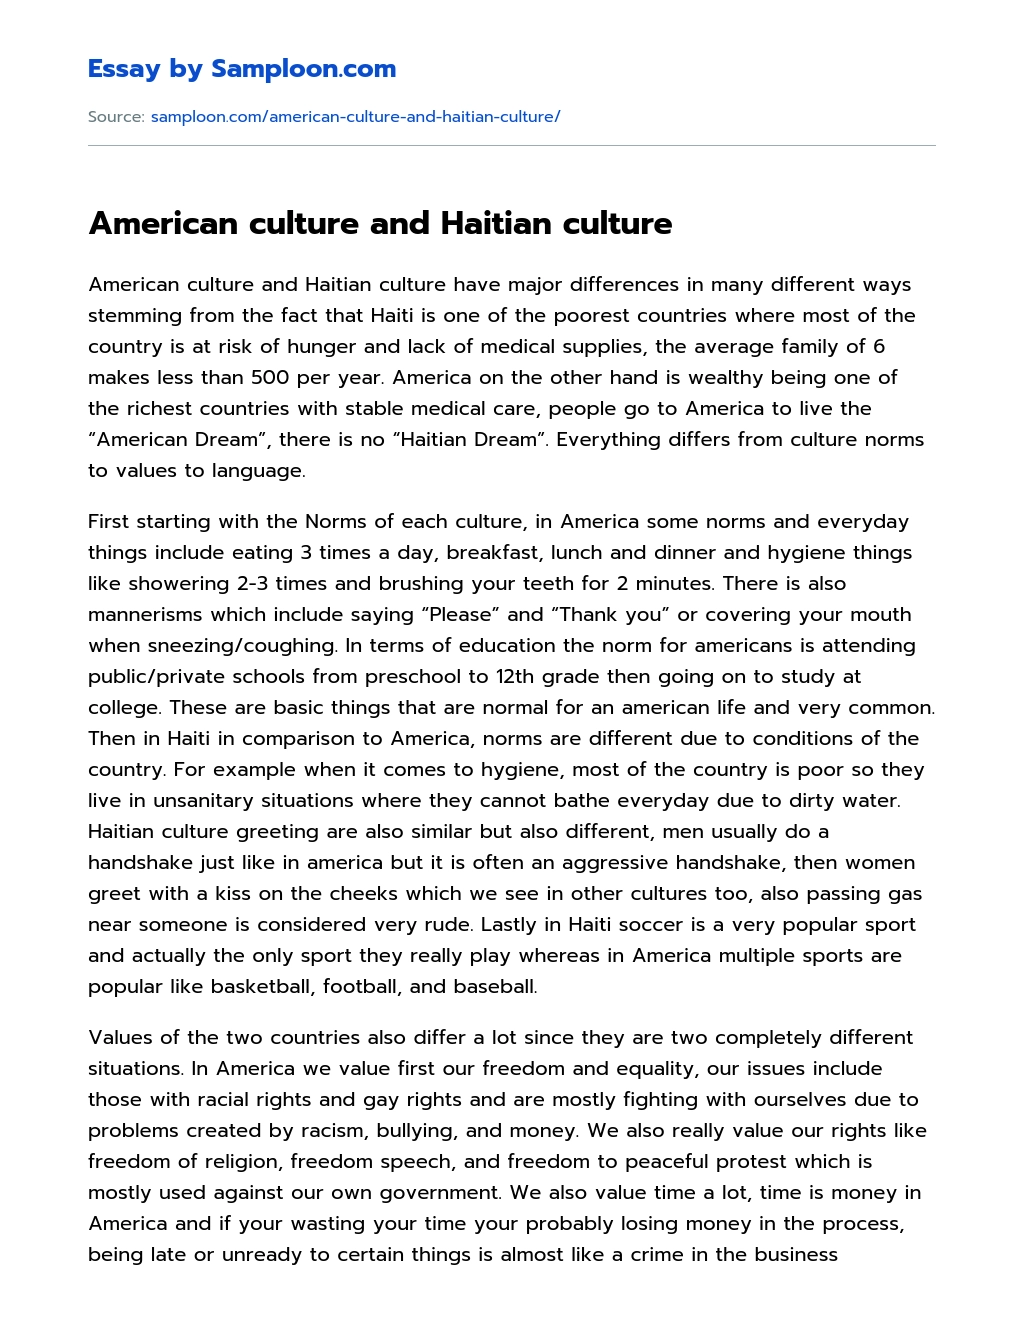 American culture and Haitian culture essay